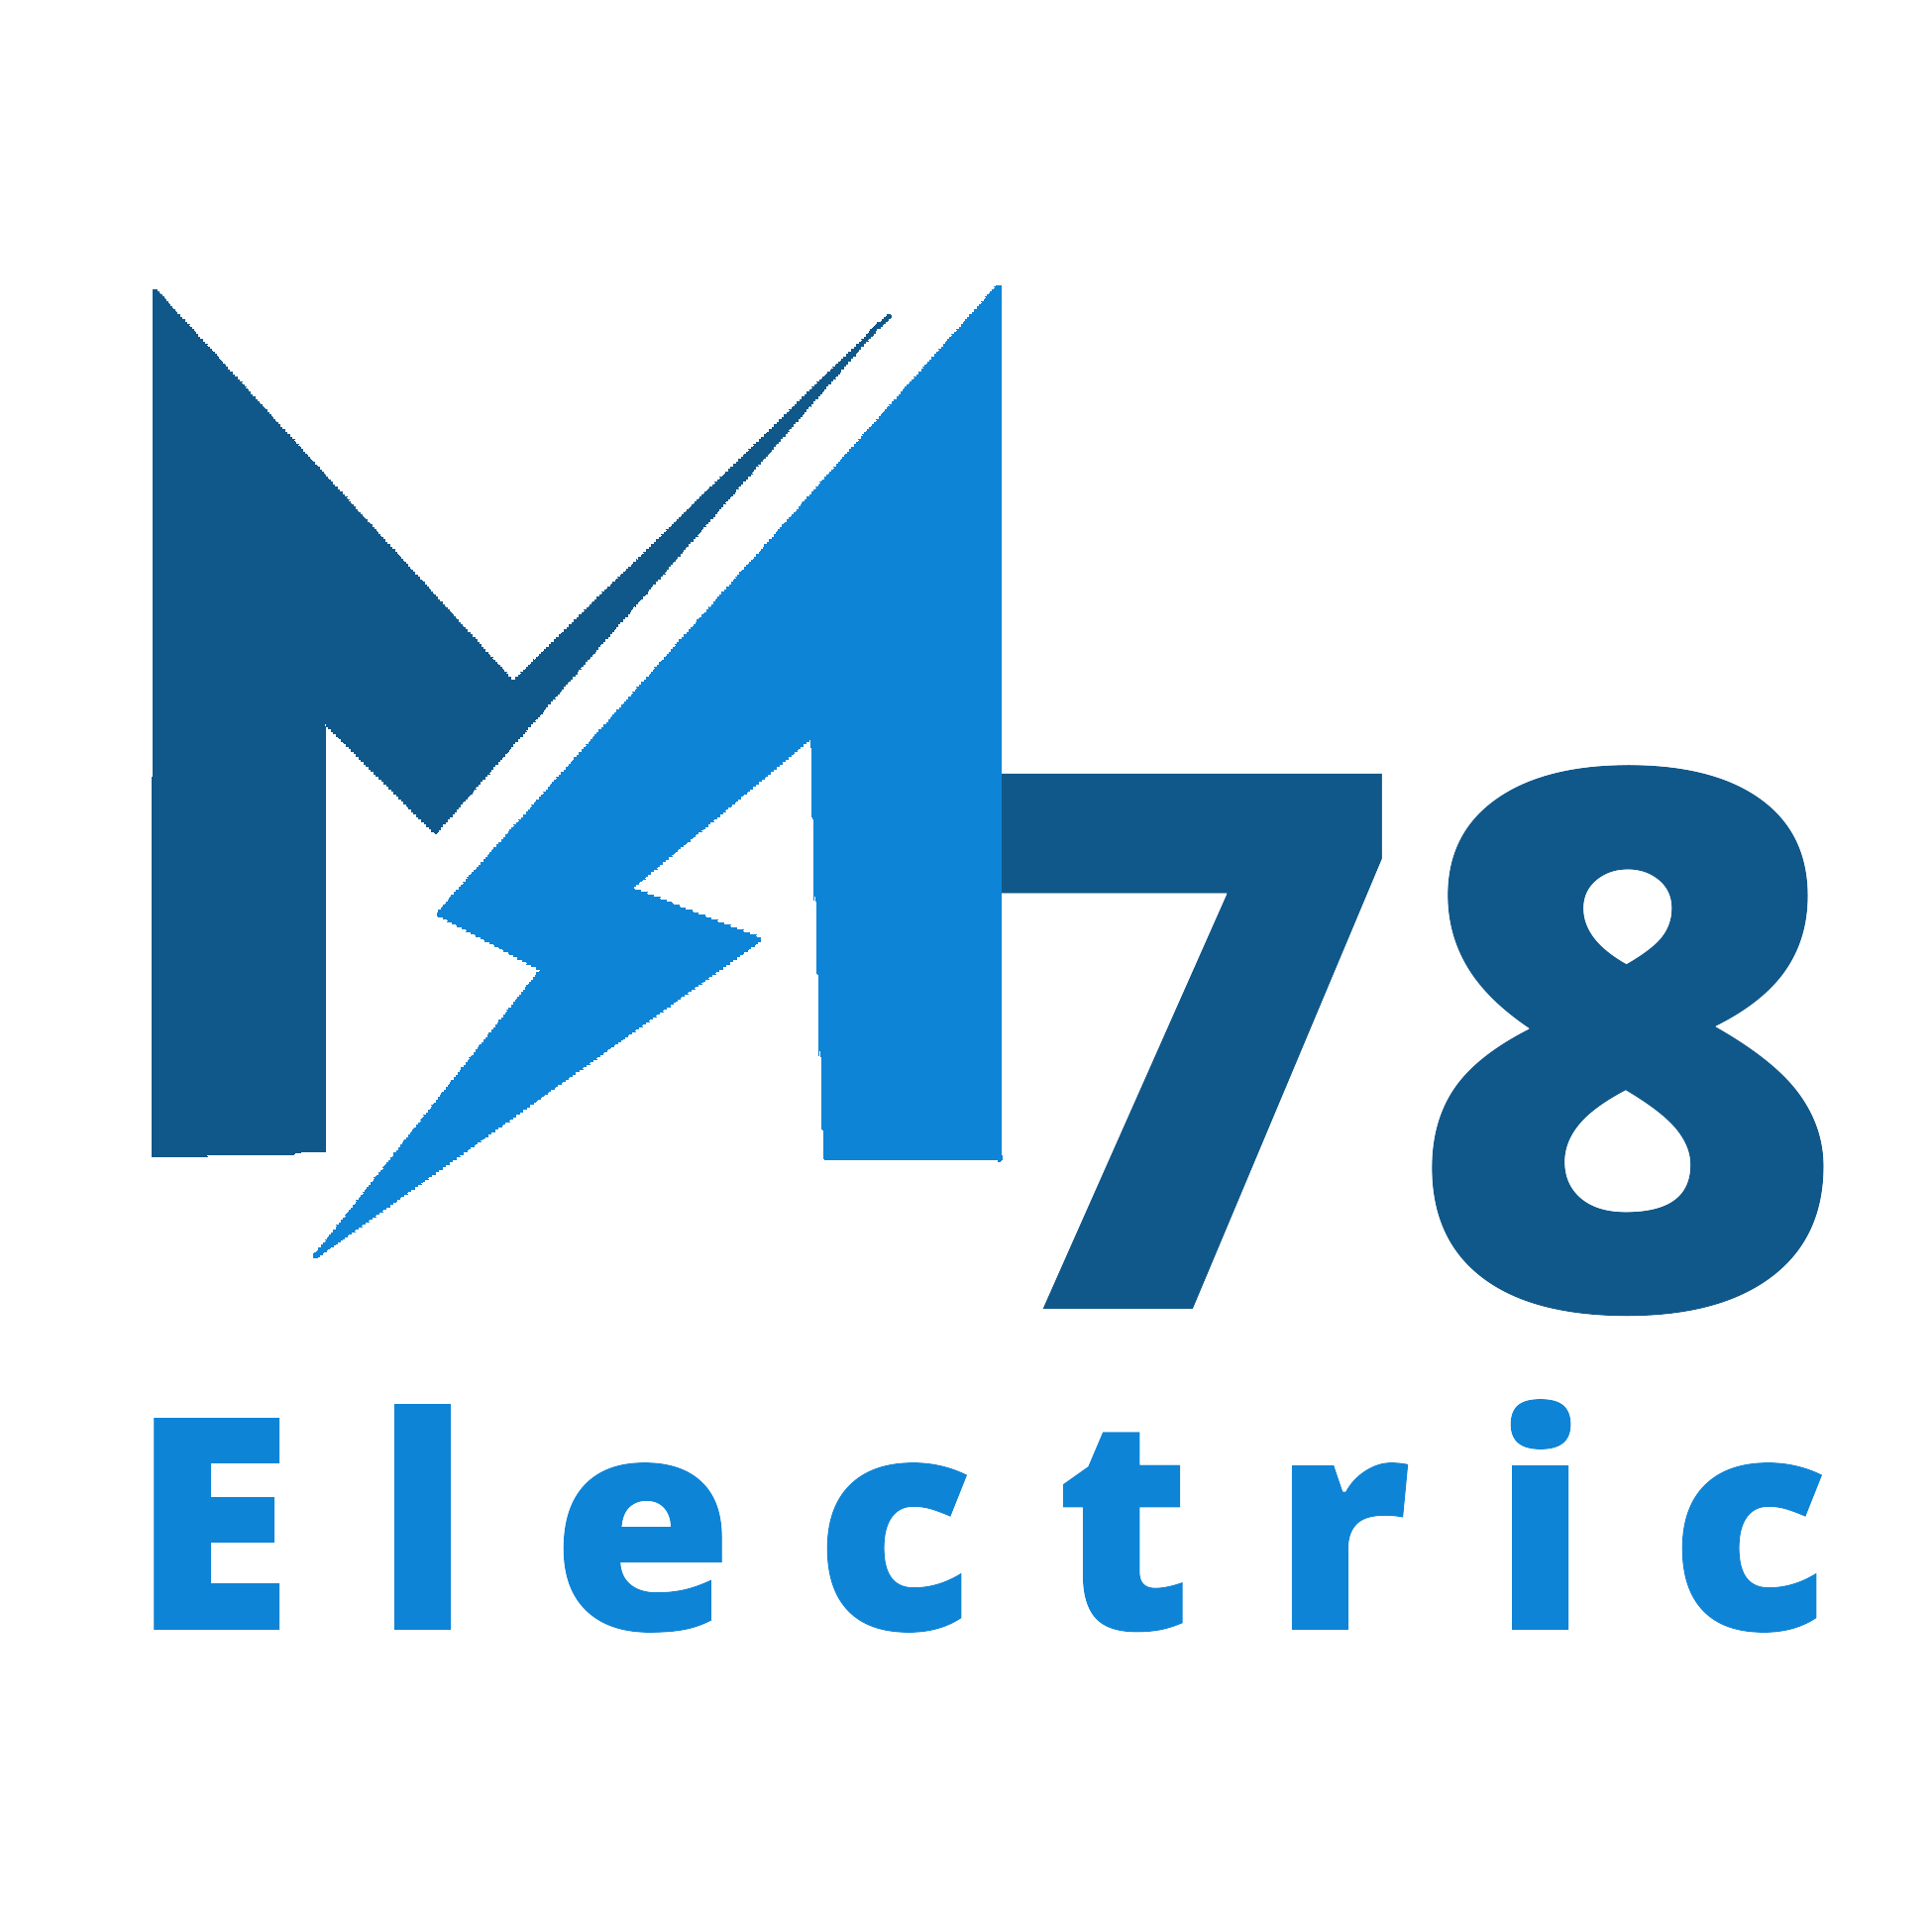 m78 electric logo image